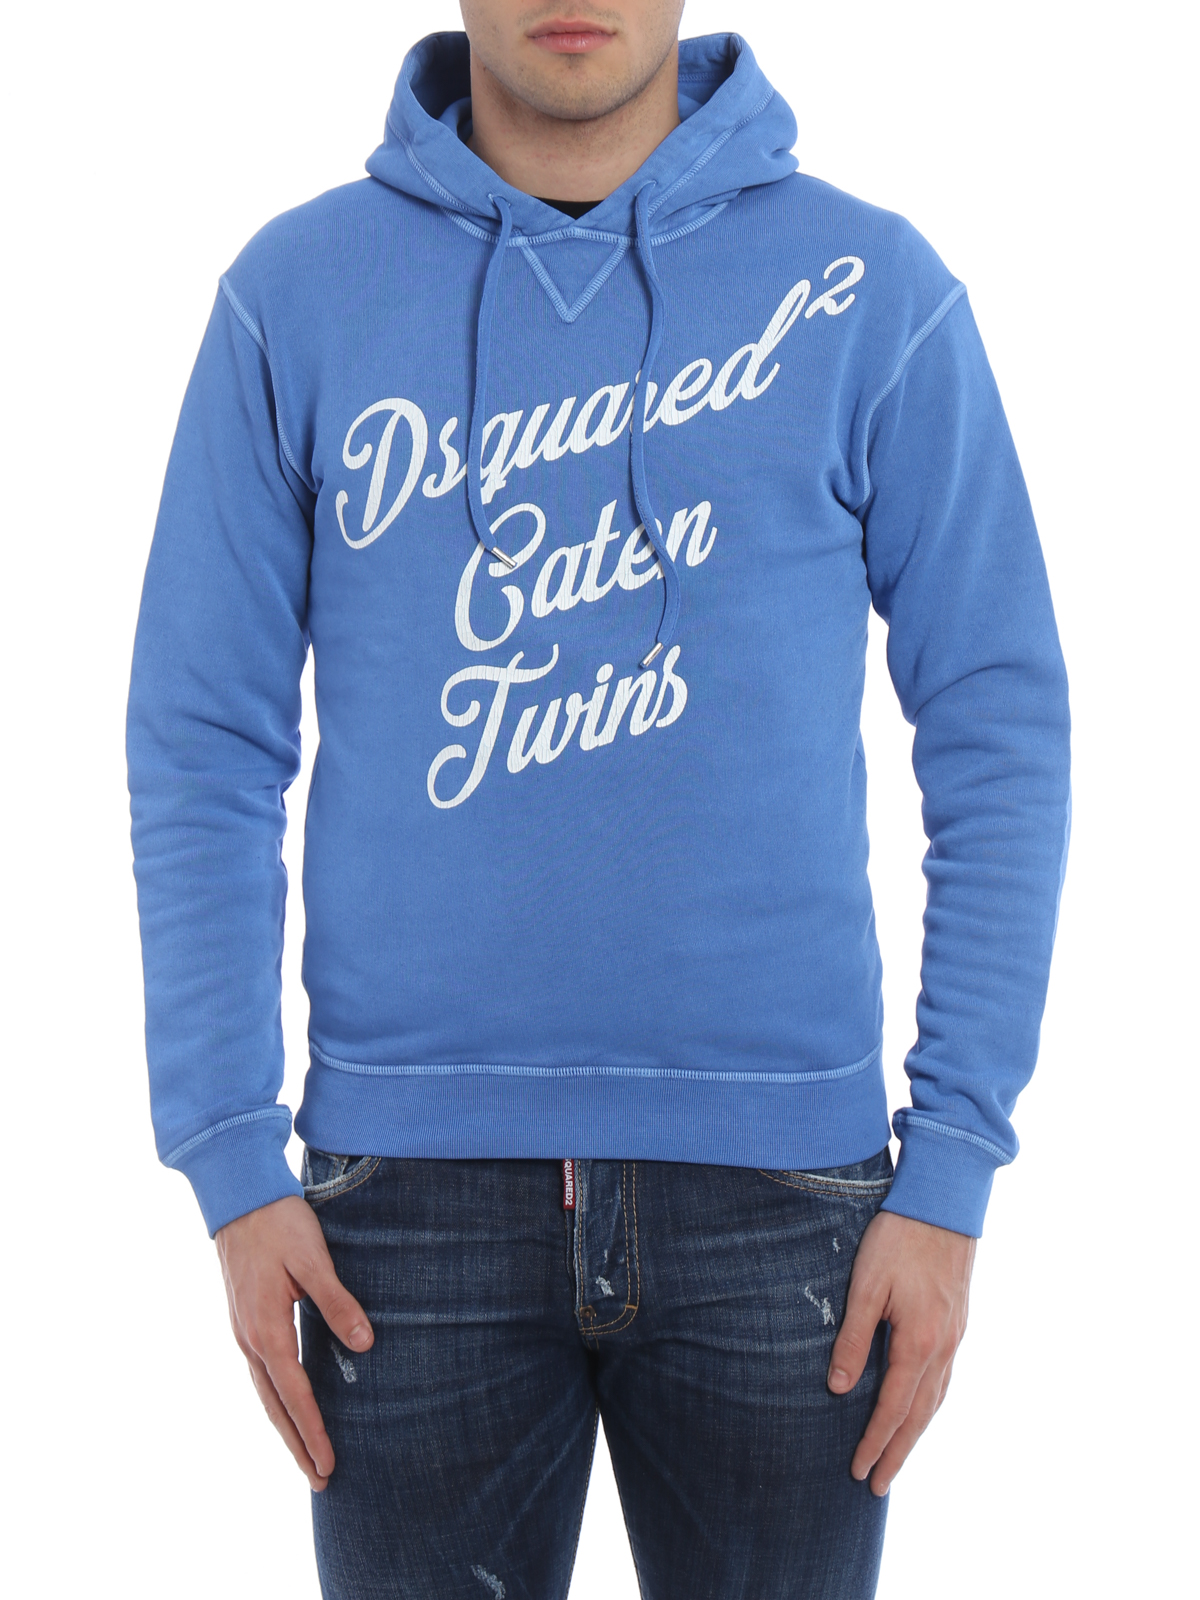 dsquared2 sweatshirt blue